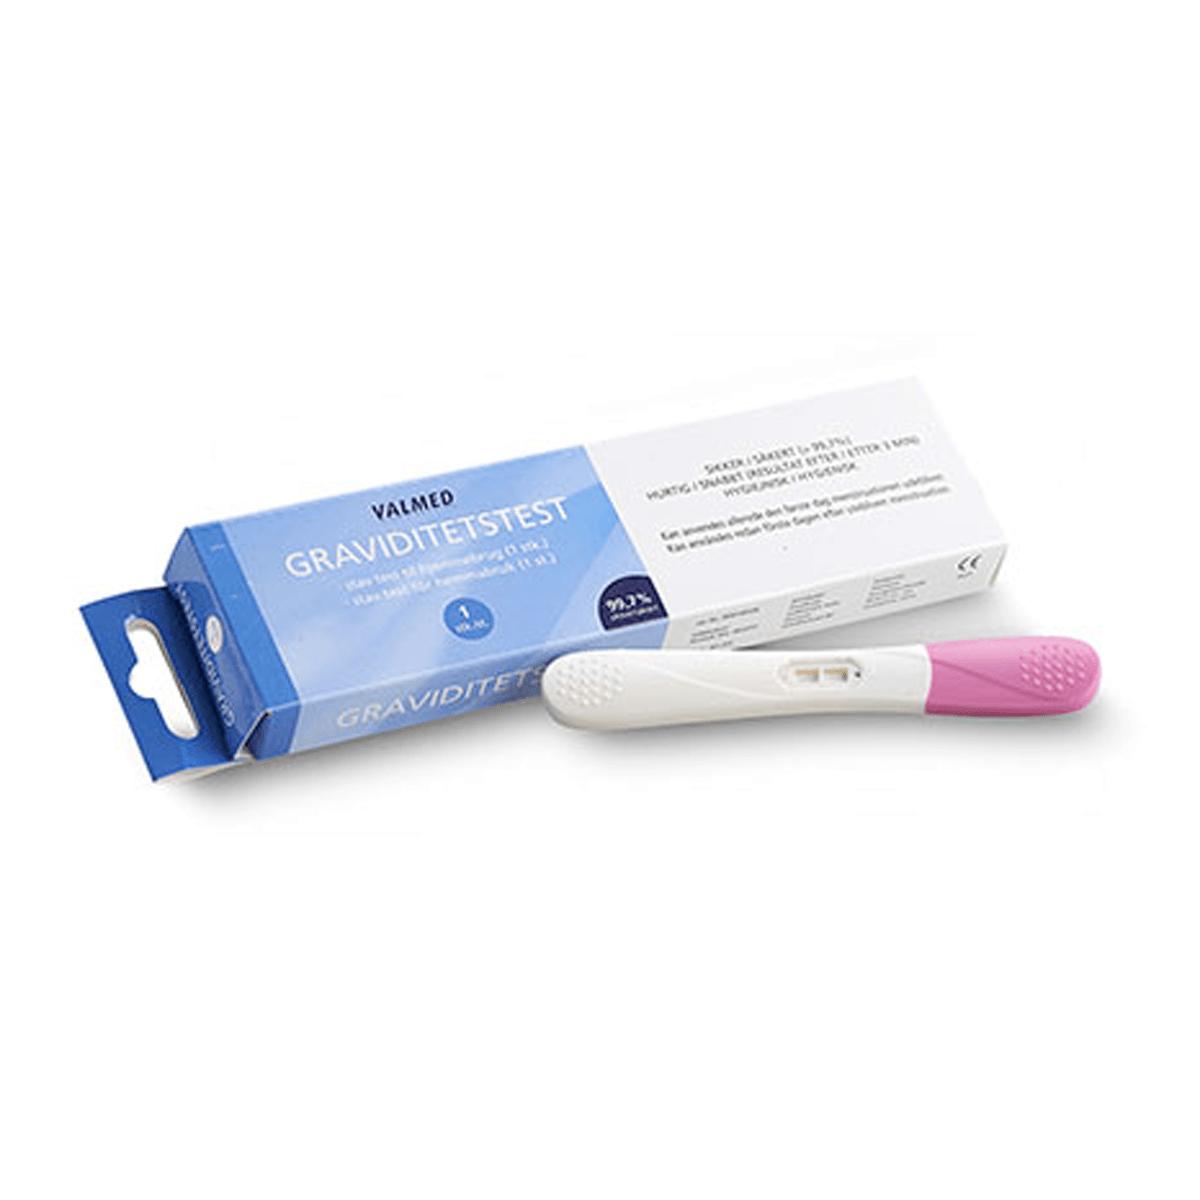 Graviditetstest 1 stav → Køb graviditetstests her